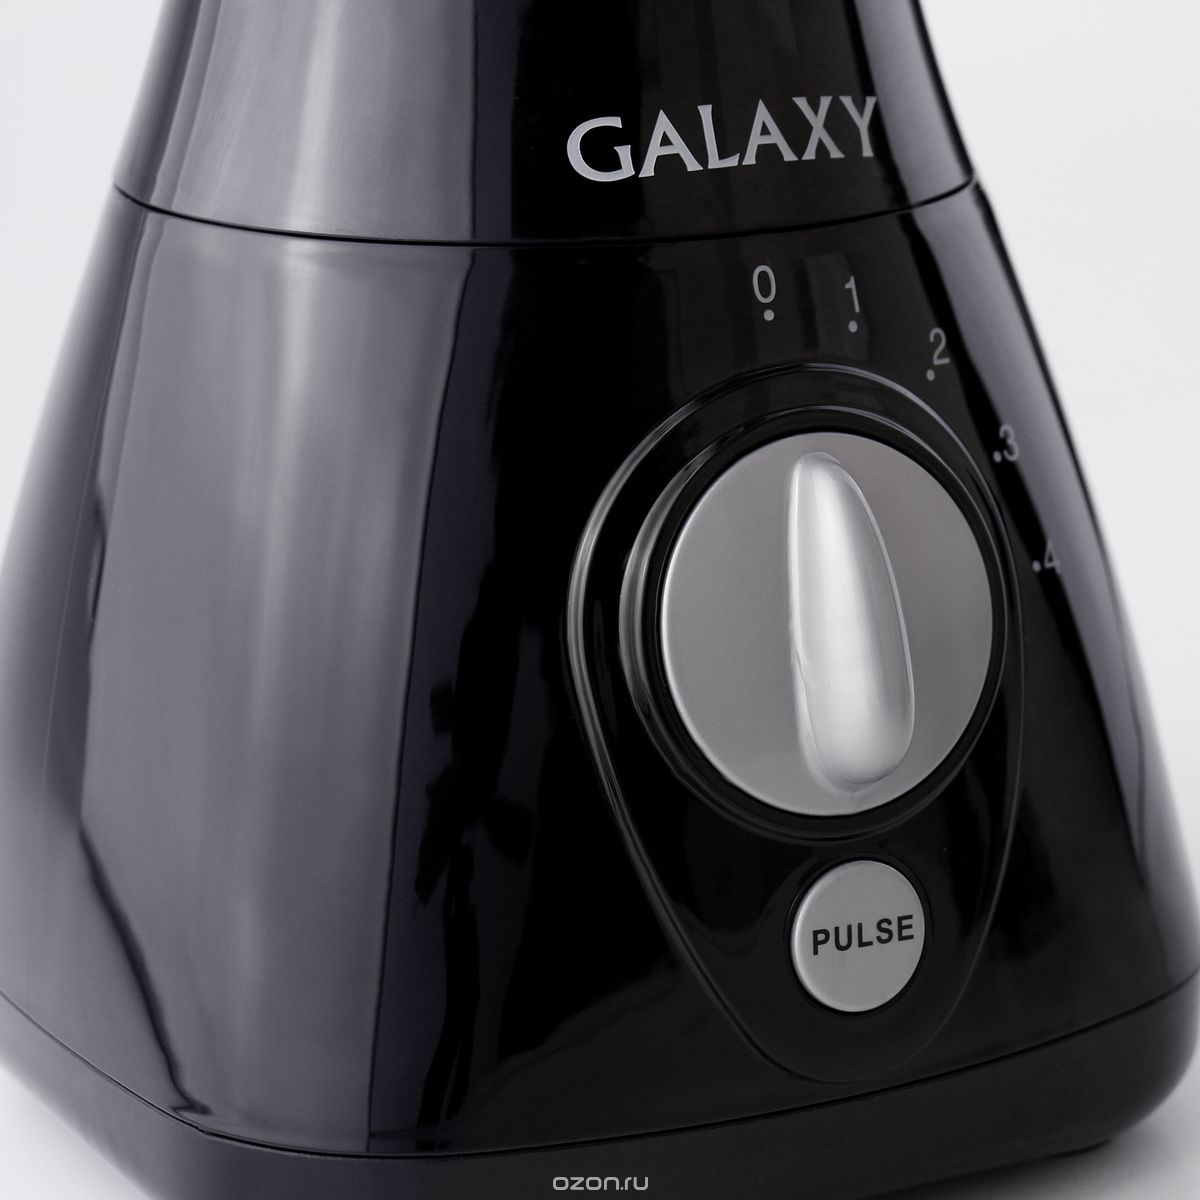  Galaxy GL 2155, Black, 